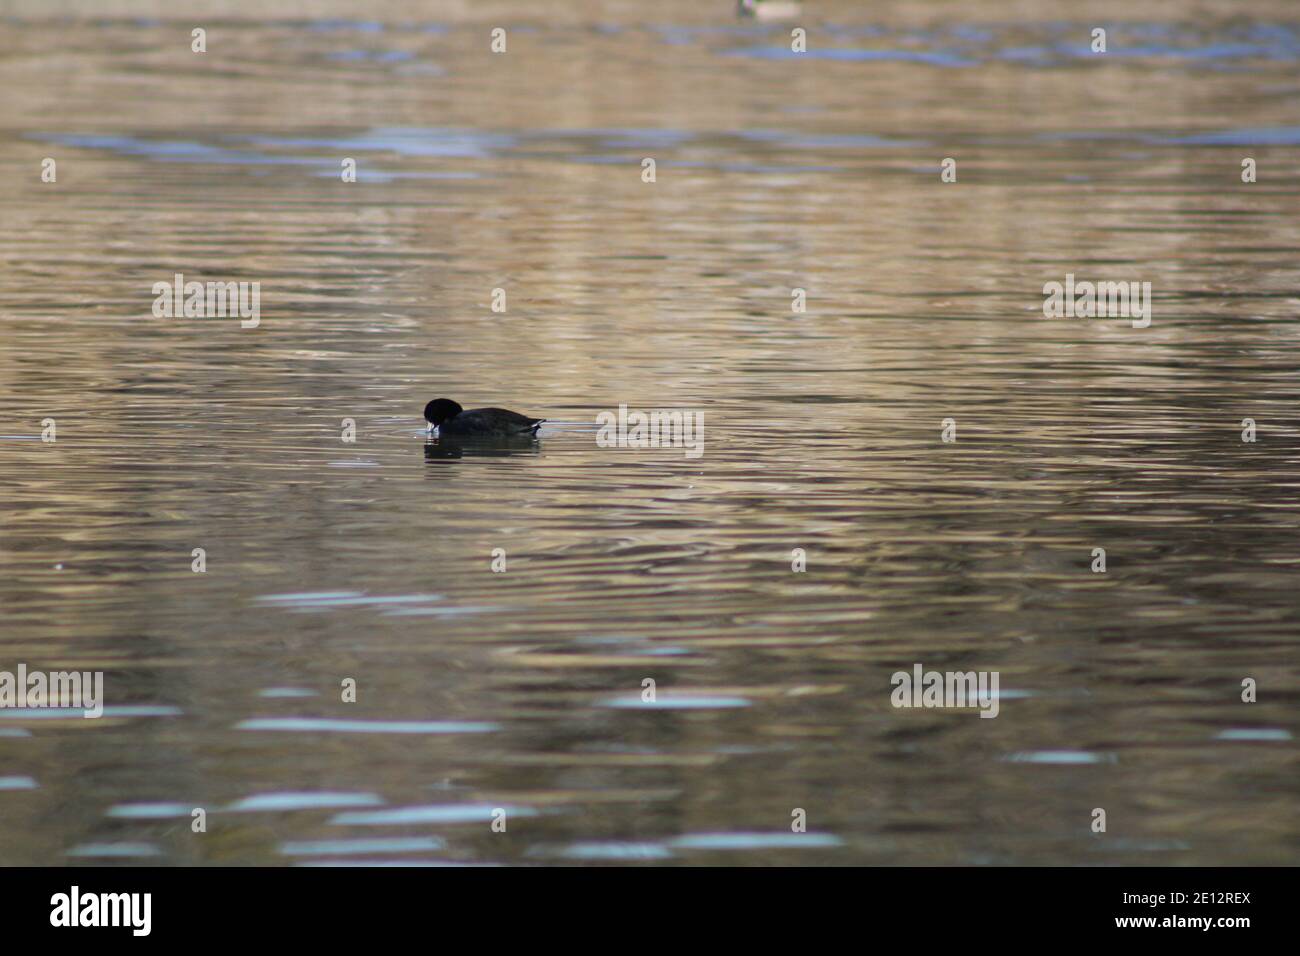 An American coot swimming in Willow Lake in Prescott, Arizona Stock Photo